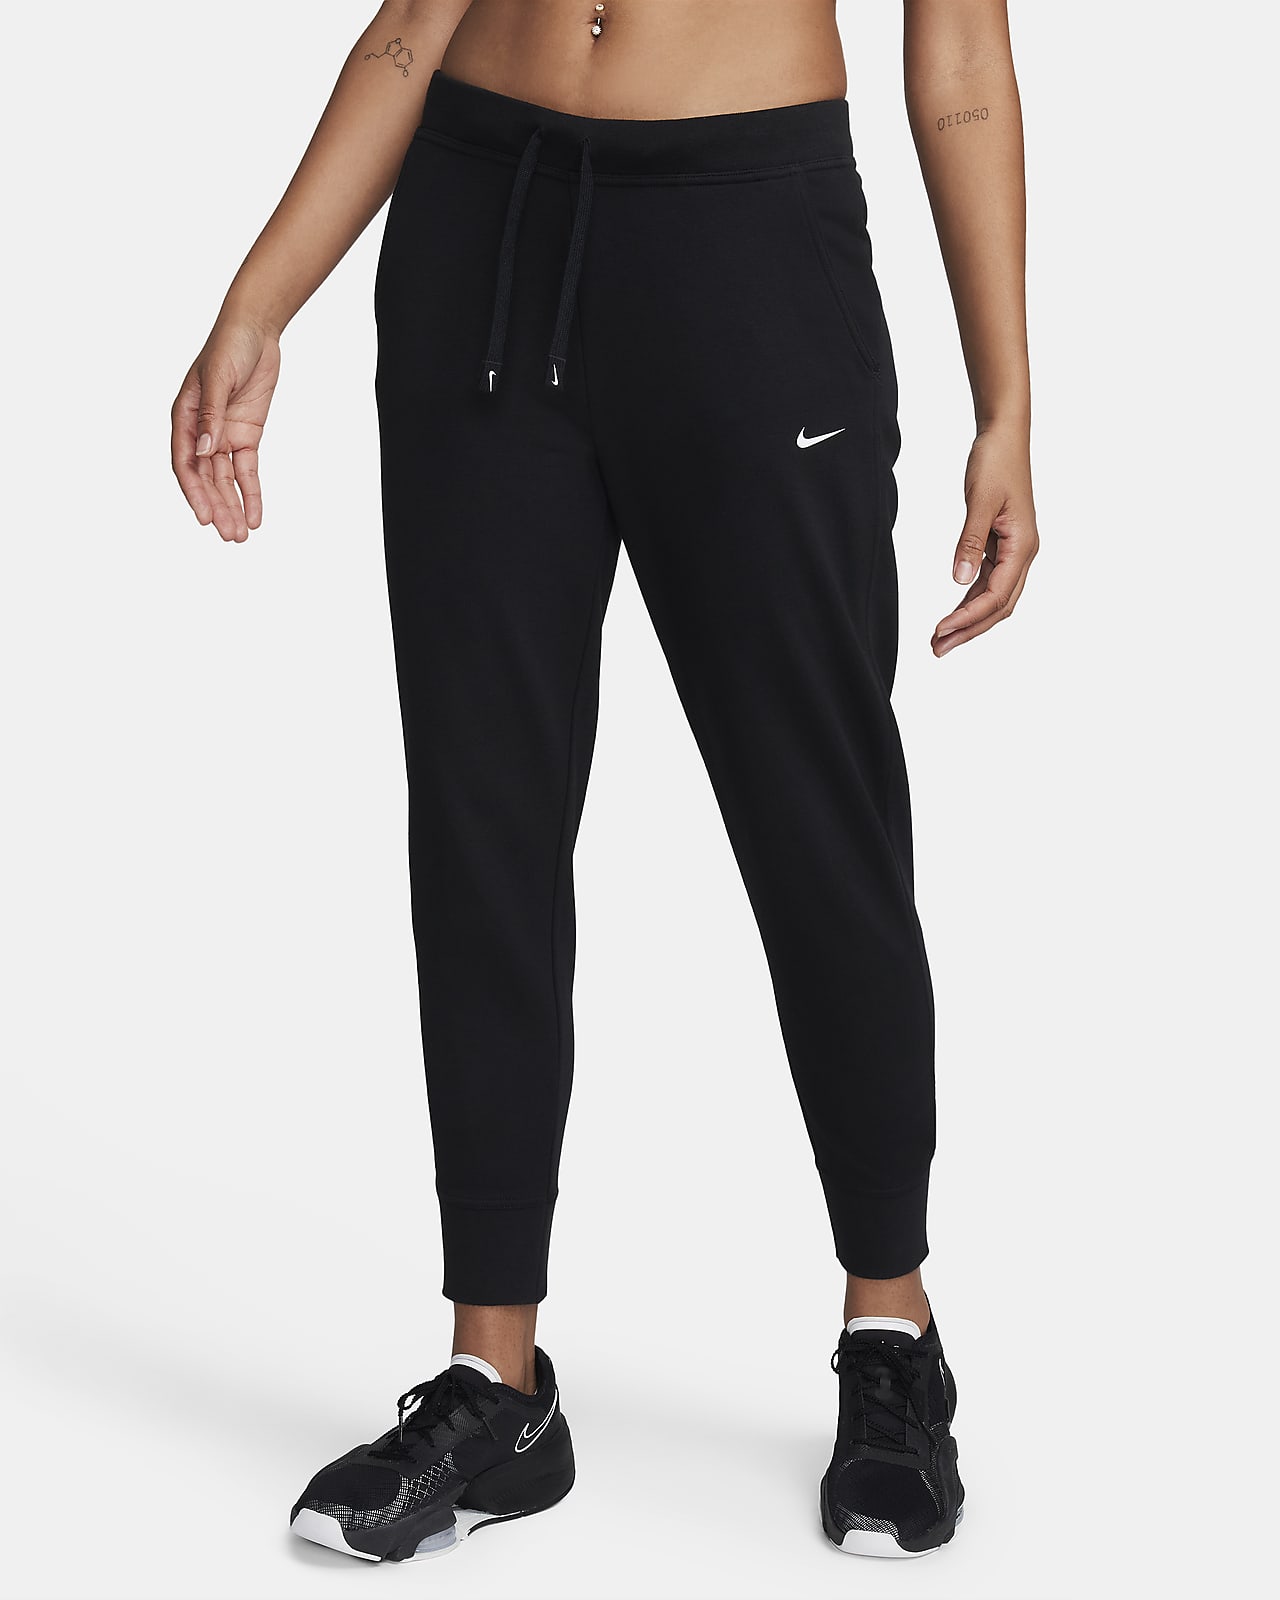 Nike Dri-FIT Get Fit női edzőnadrág